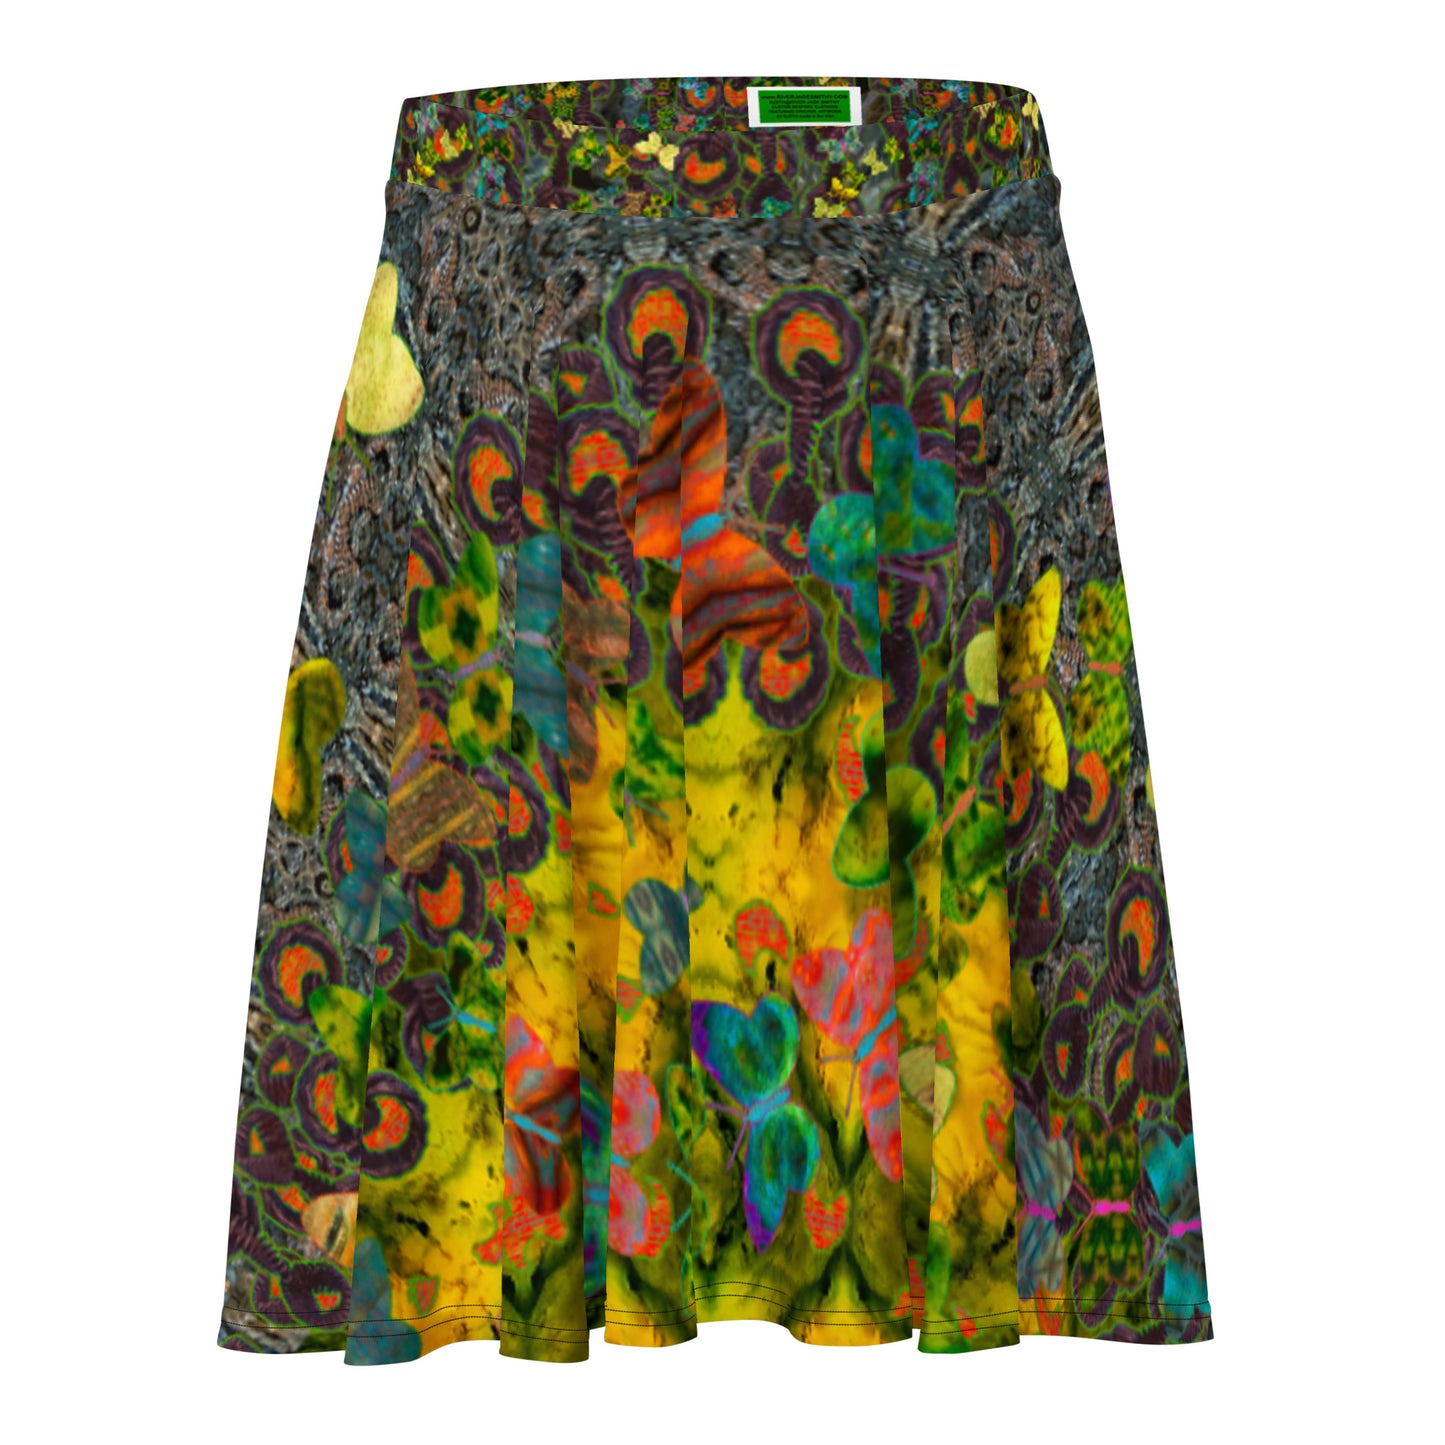 Skater Skirt (Her/They)(Butterfly Glade Shoal Solstice GNHV 8.1) RJSTH@Fabric#1  RJSTHw2021 RJS